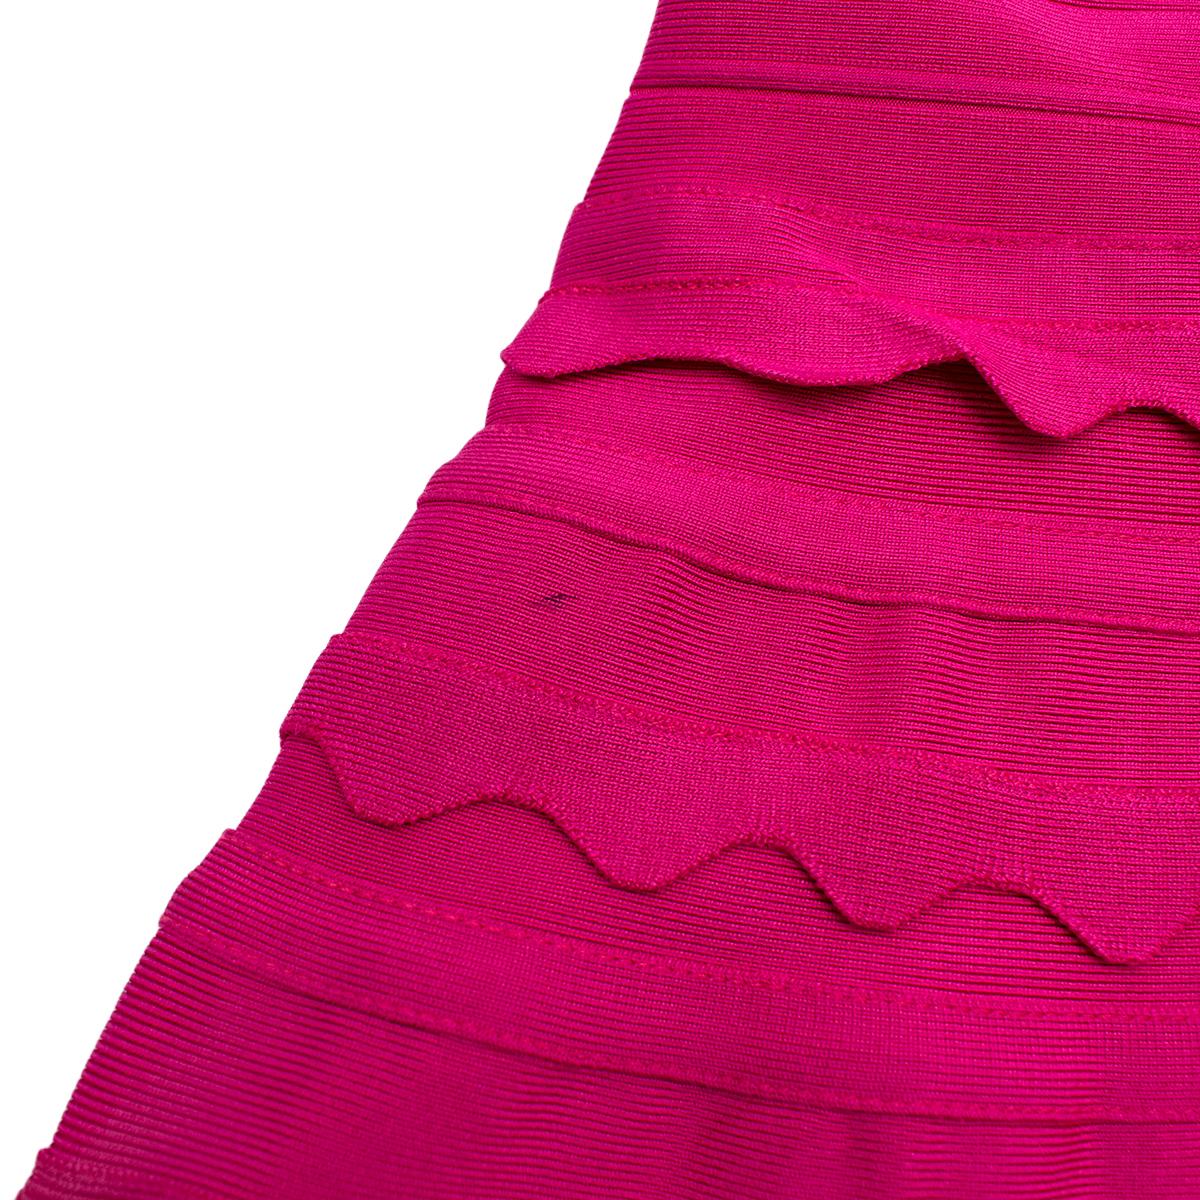 Herve Leger Nikayla Scalloped Edge Caprice Pink Dress  - Us size 6 For Sale 3